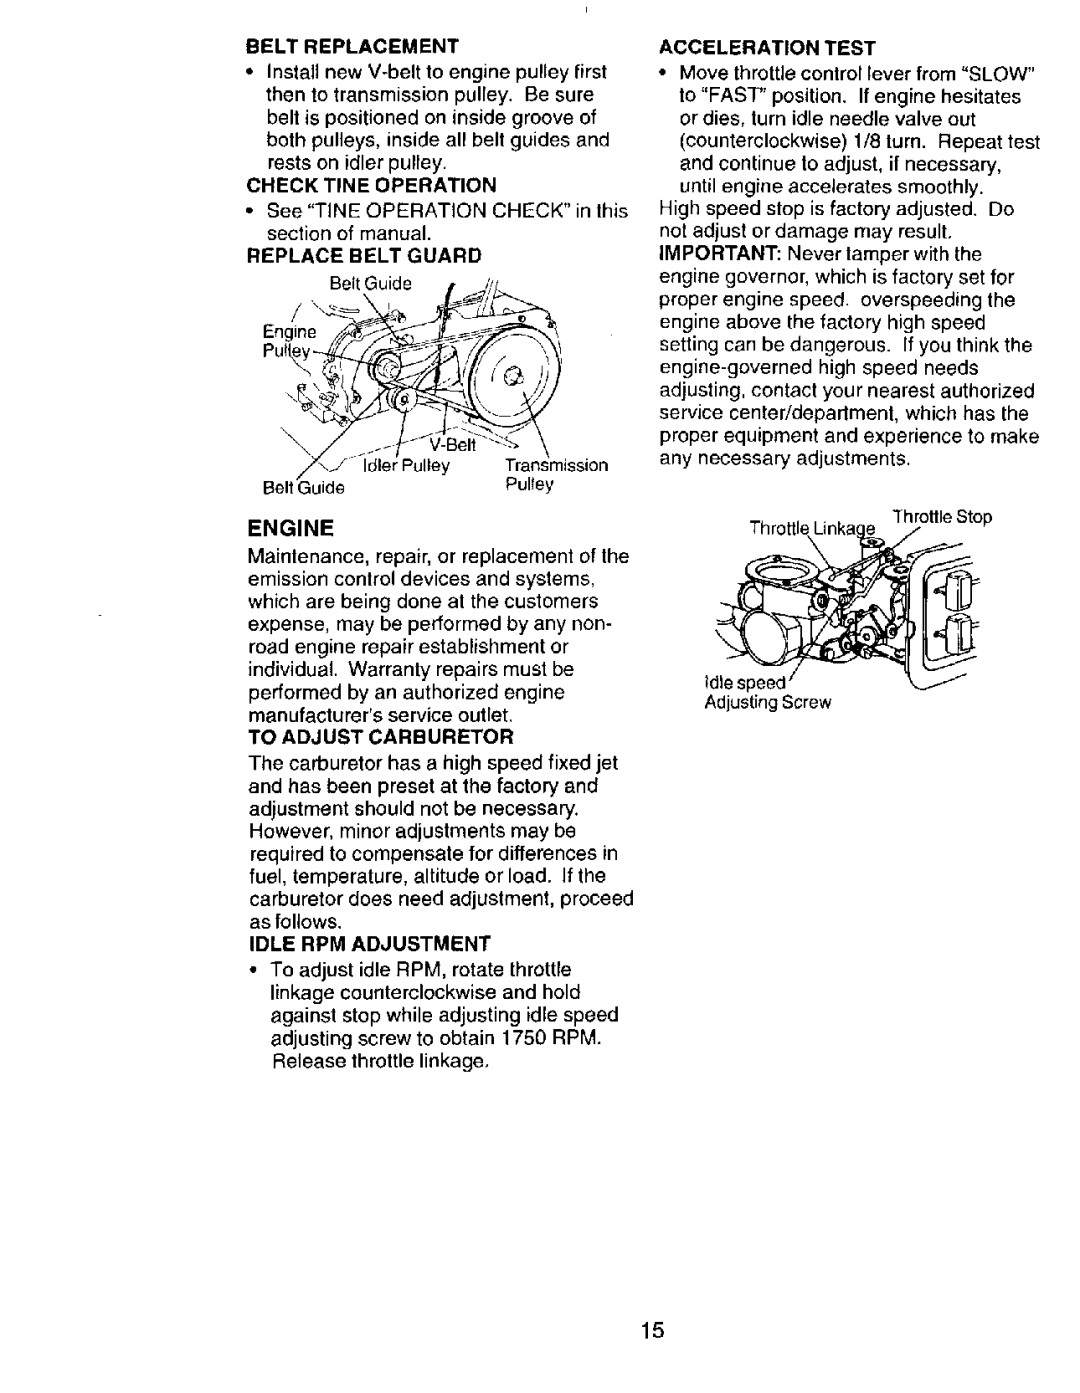 Craftsman 917.292394 owner manual Belt Replacement, Replace Belt Guard, Idle RPM Adjustment, Acceleration Test 